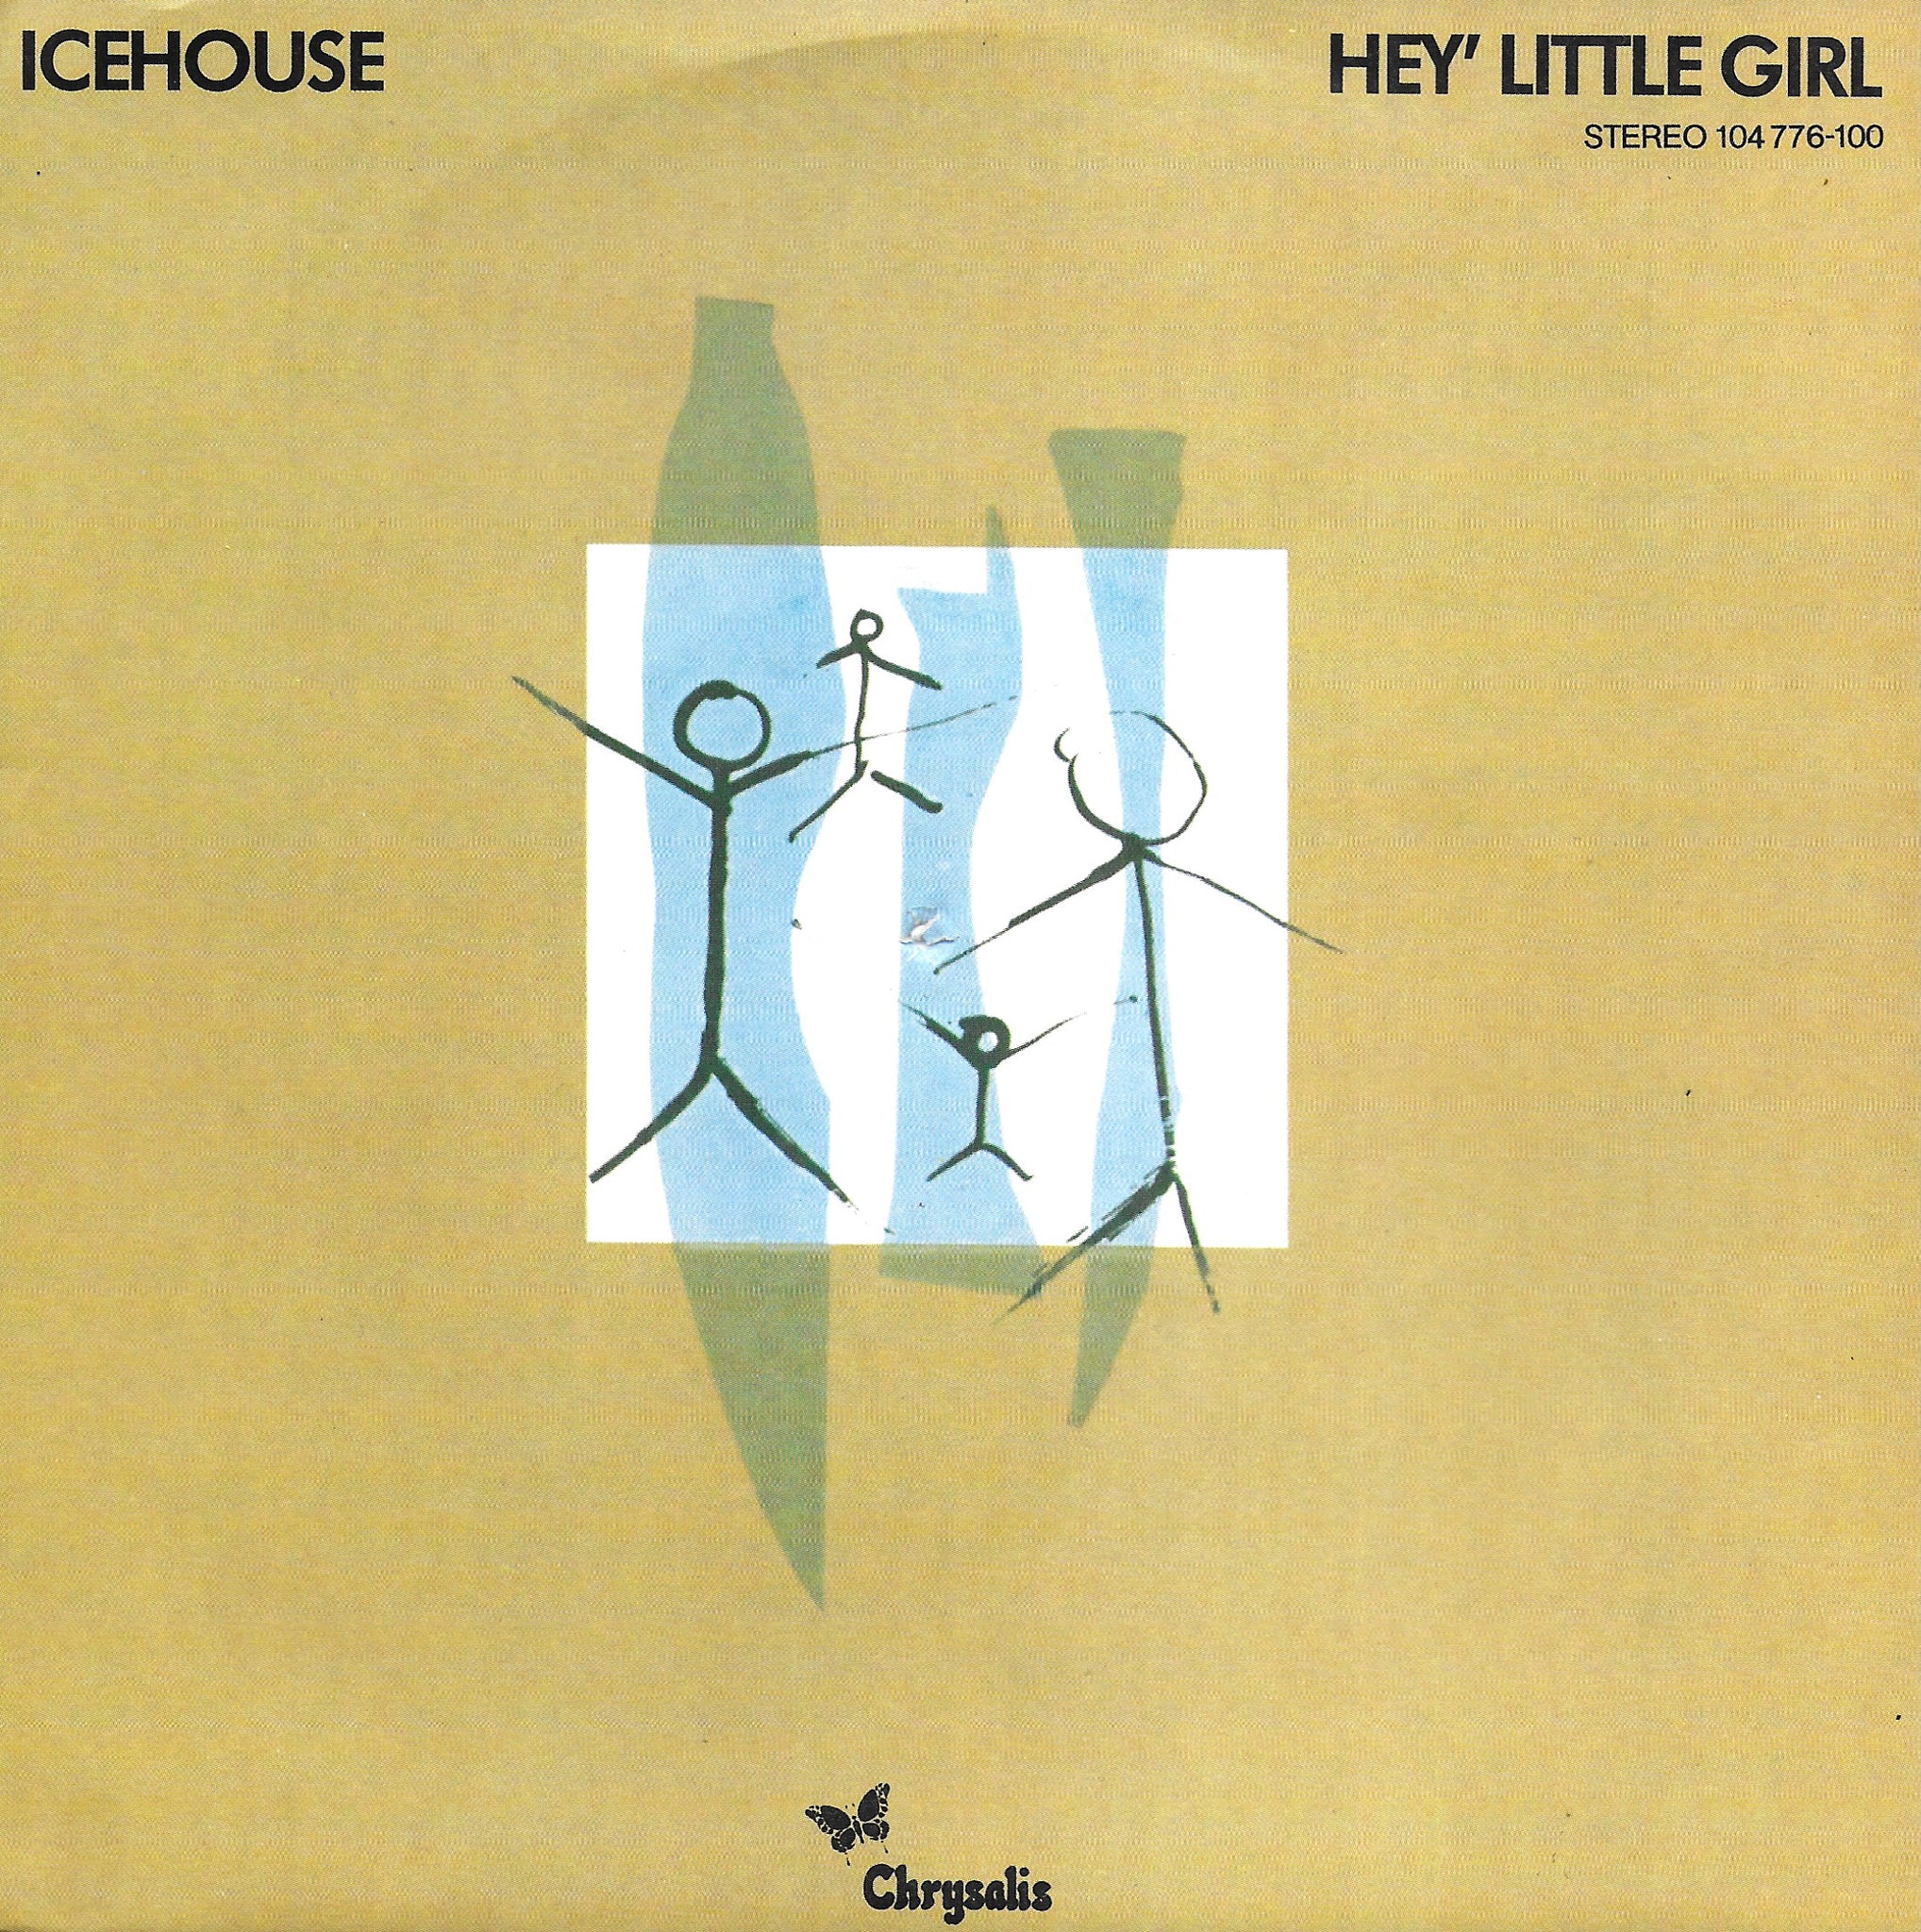 Icehouse - Hey little girl